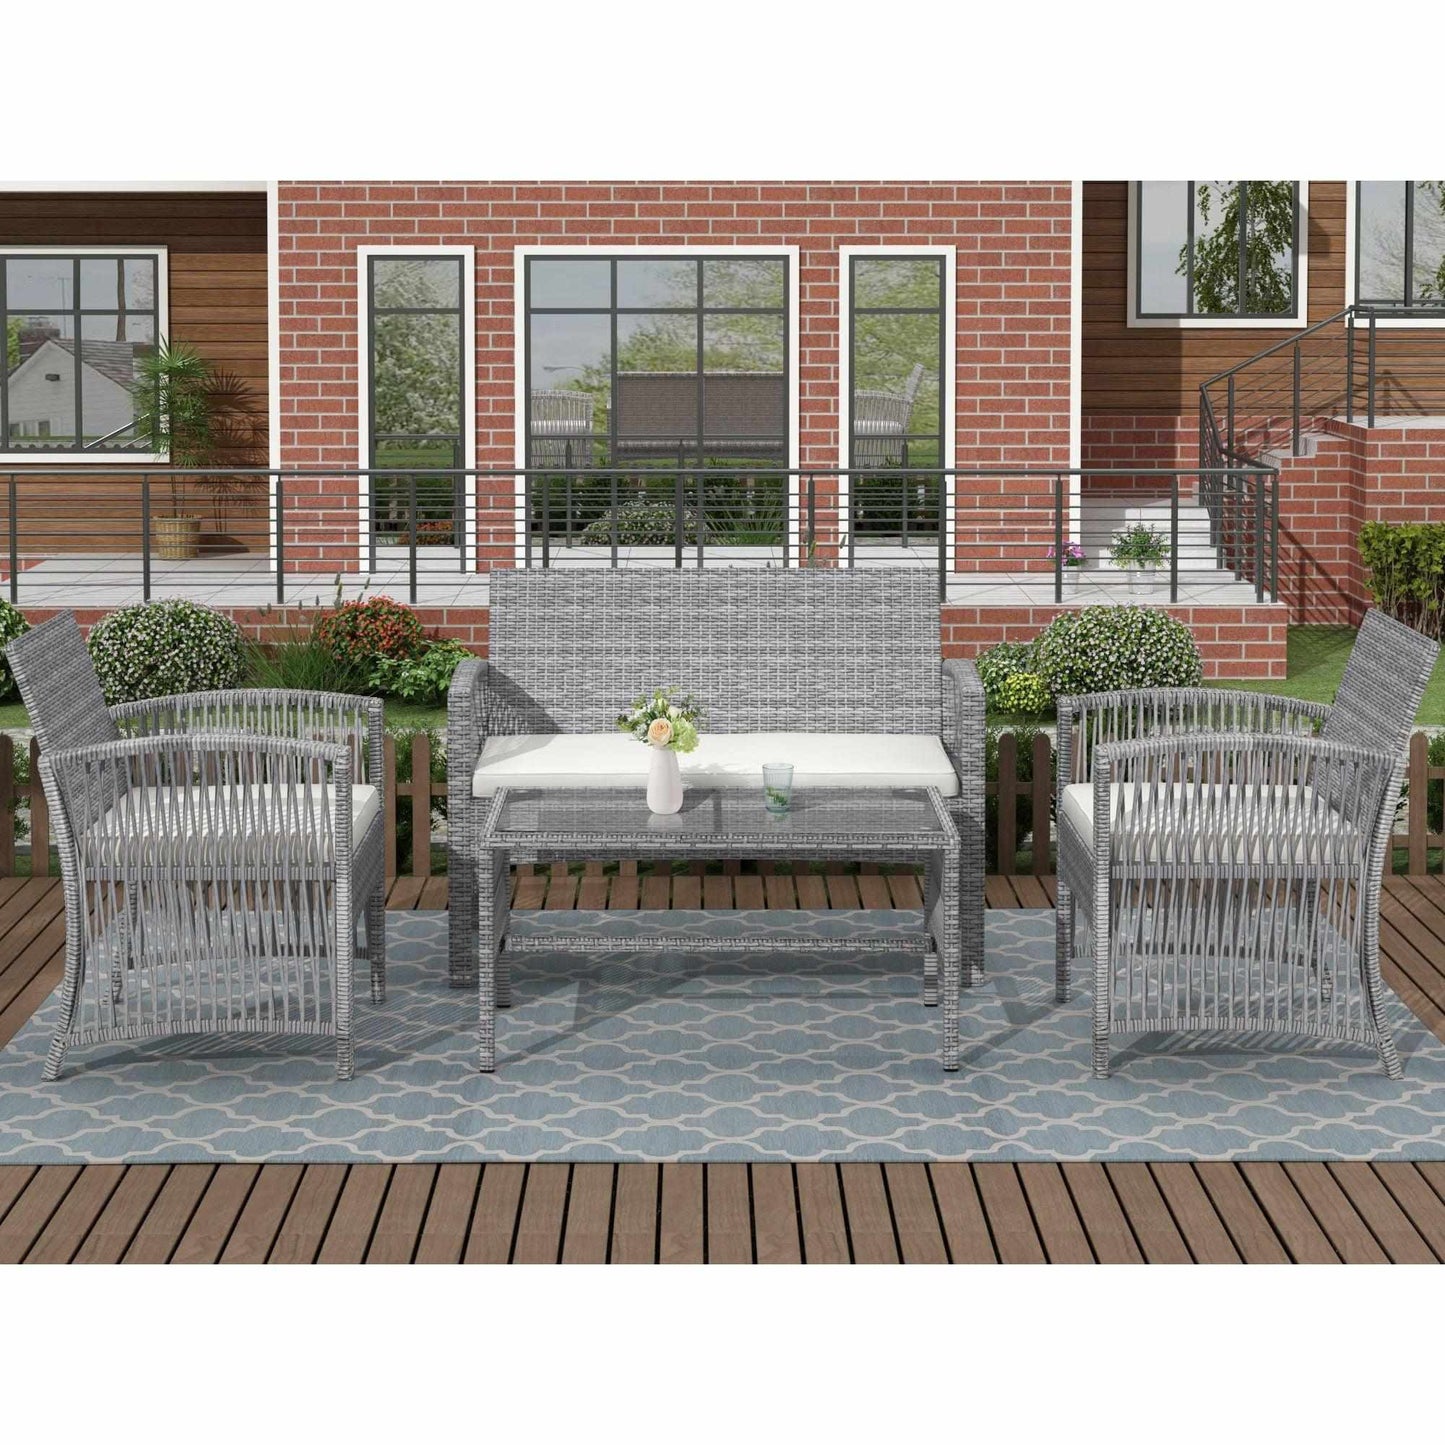 4 Pieces Outdoor Furniture Rattan Chair  Table Patio Set Outdoor Sofa for Garden, Backyard, Porch and Poolside, Gray